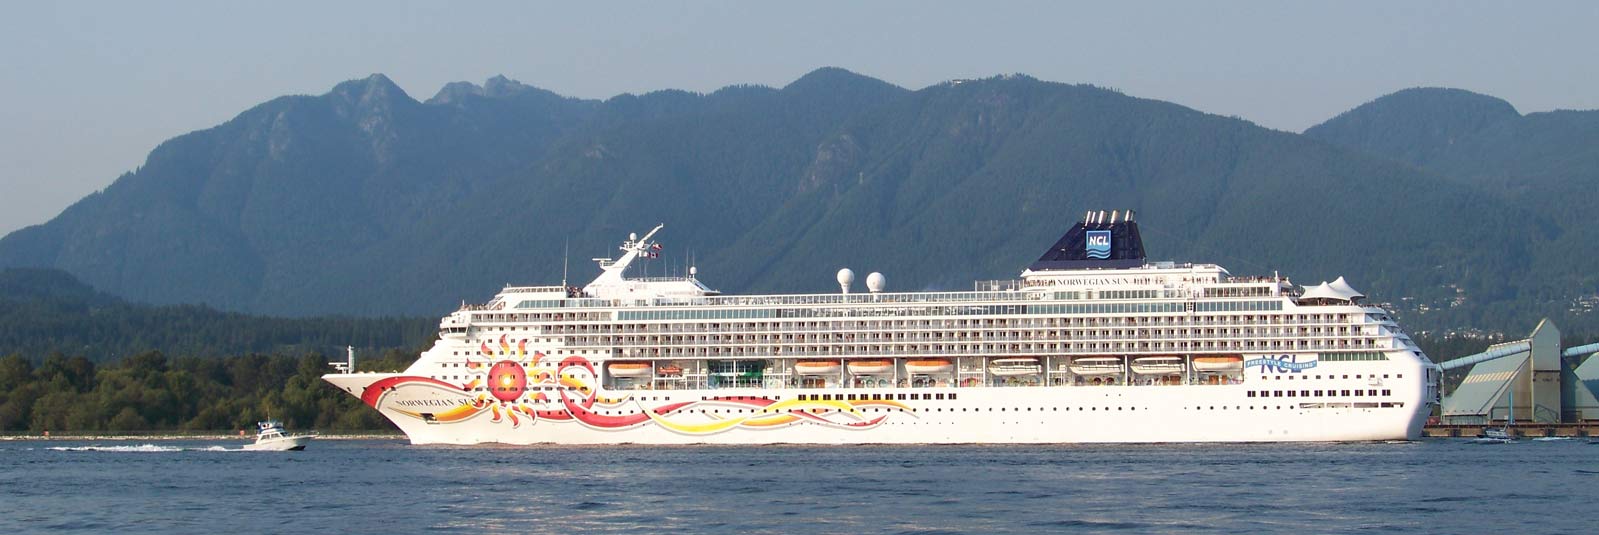 Bahamas Cruises.jpg